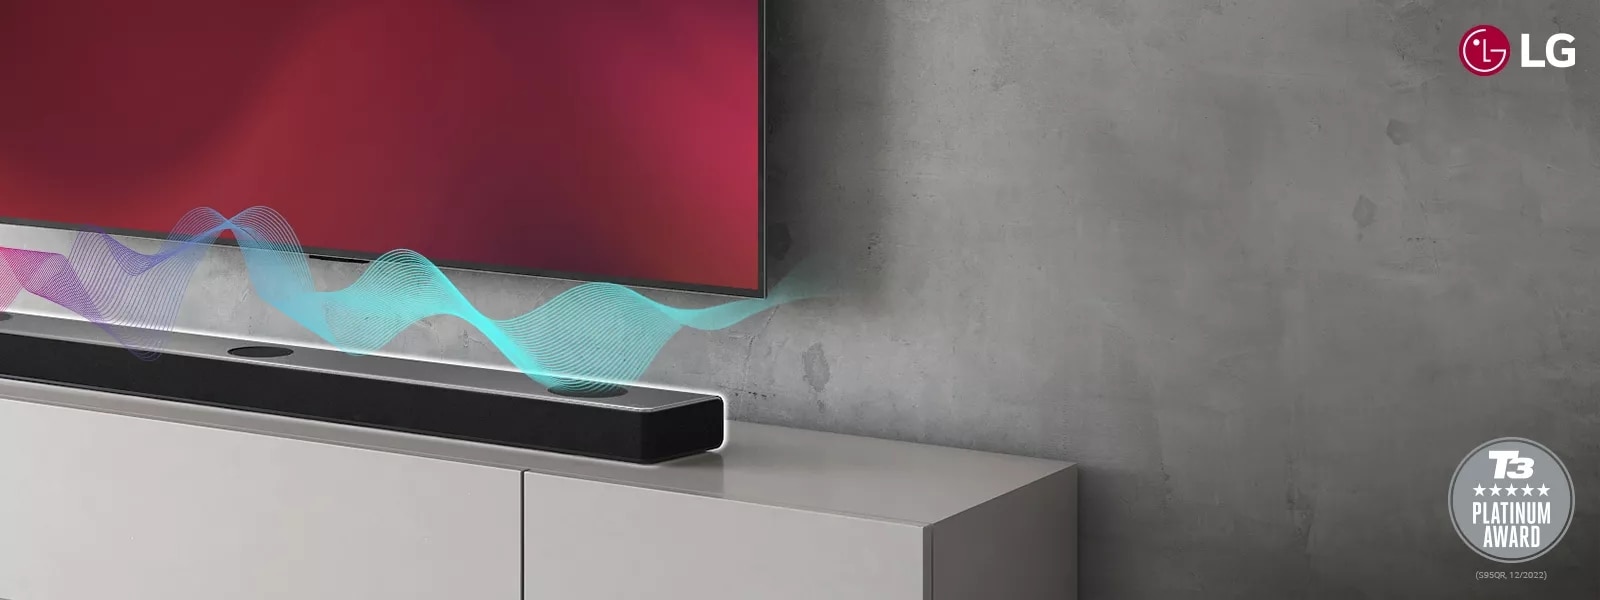 LG Sound Bar | Wireless & Bluetooth Audio with Dolby Atmos